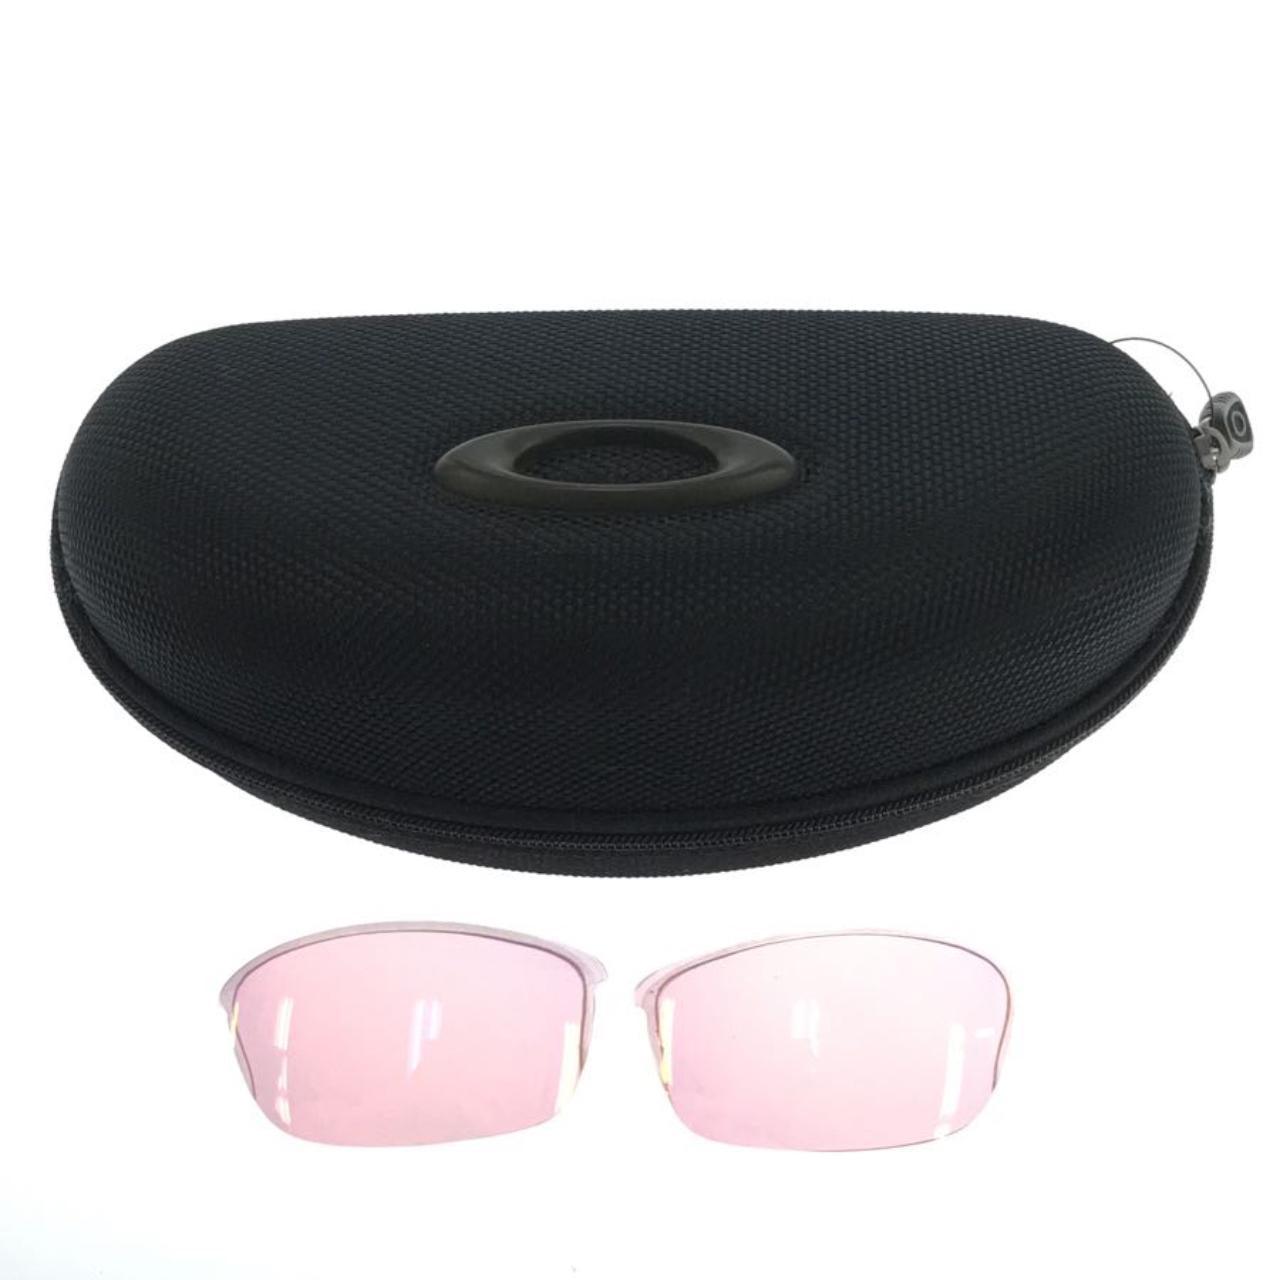 Oakley Sunglasses Polarized Lens White FLAK JACKET - Known Source